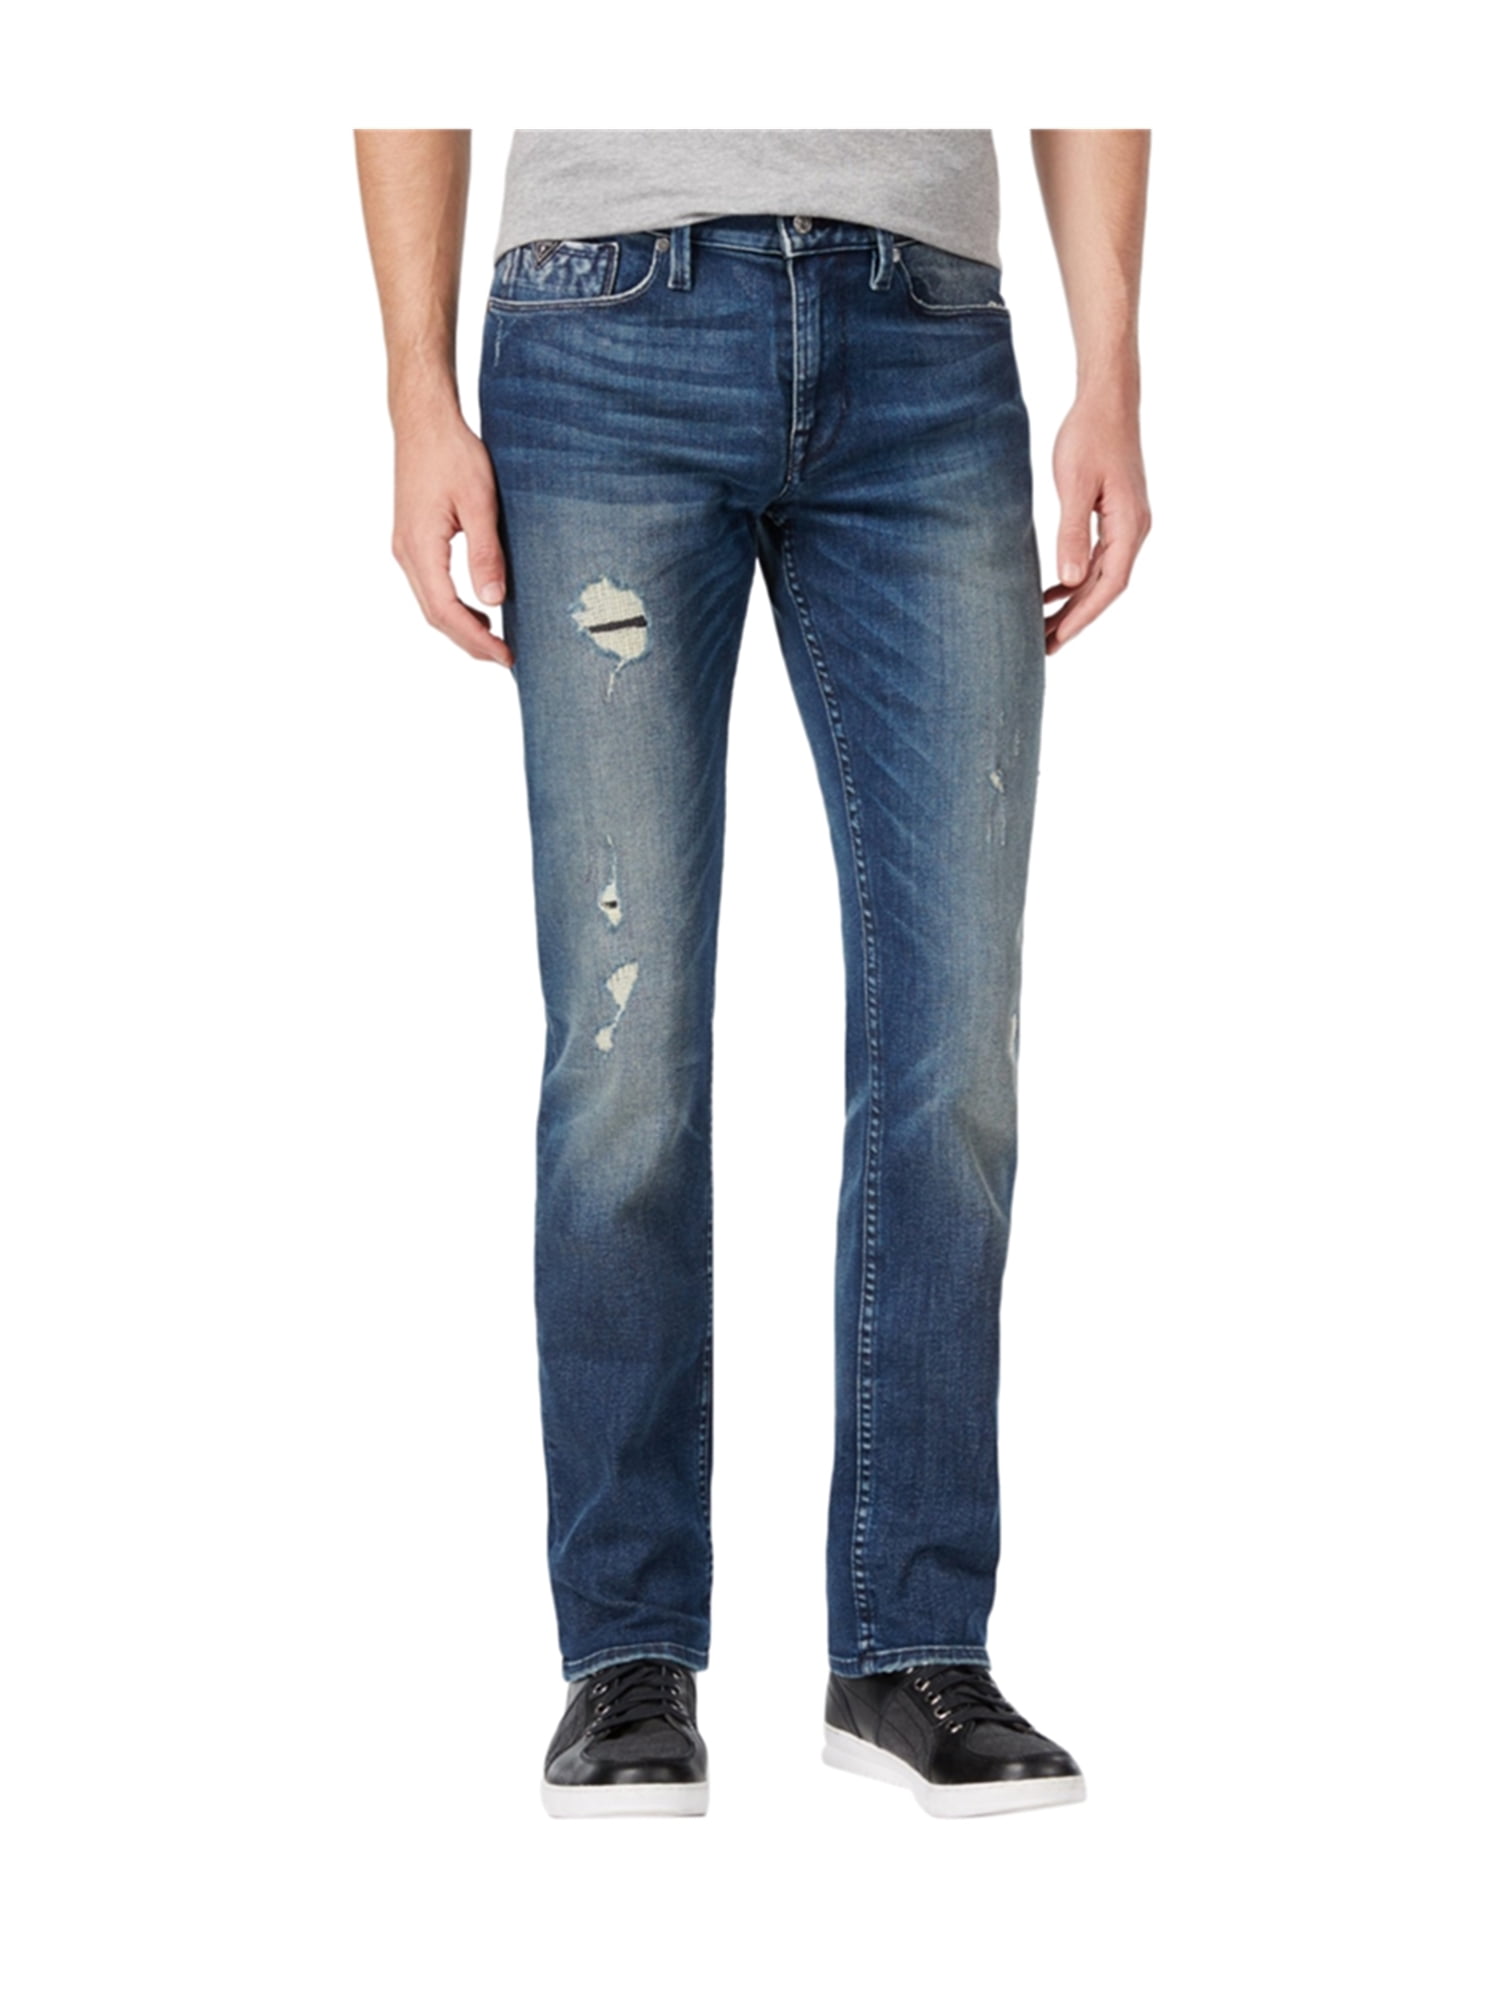 GUESS - GUESS Mens Slim Straight Leg Jeans explorationblue 32x33 - Walmart.com